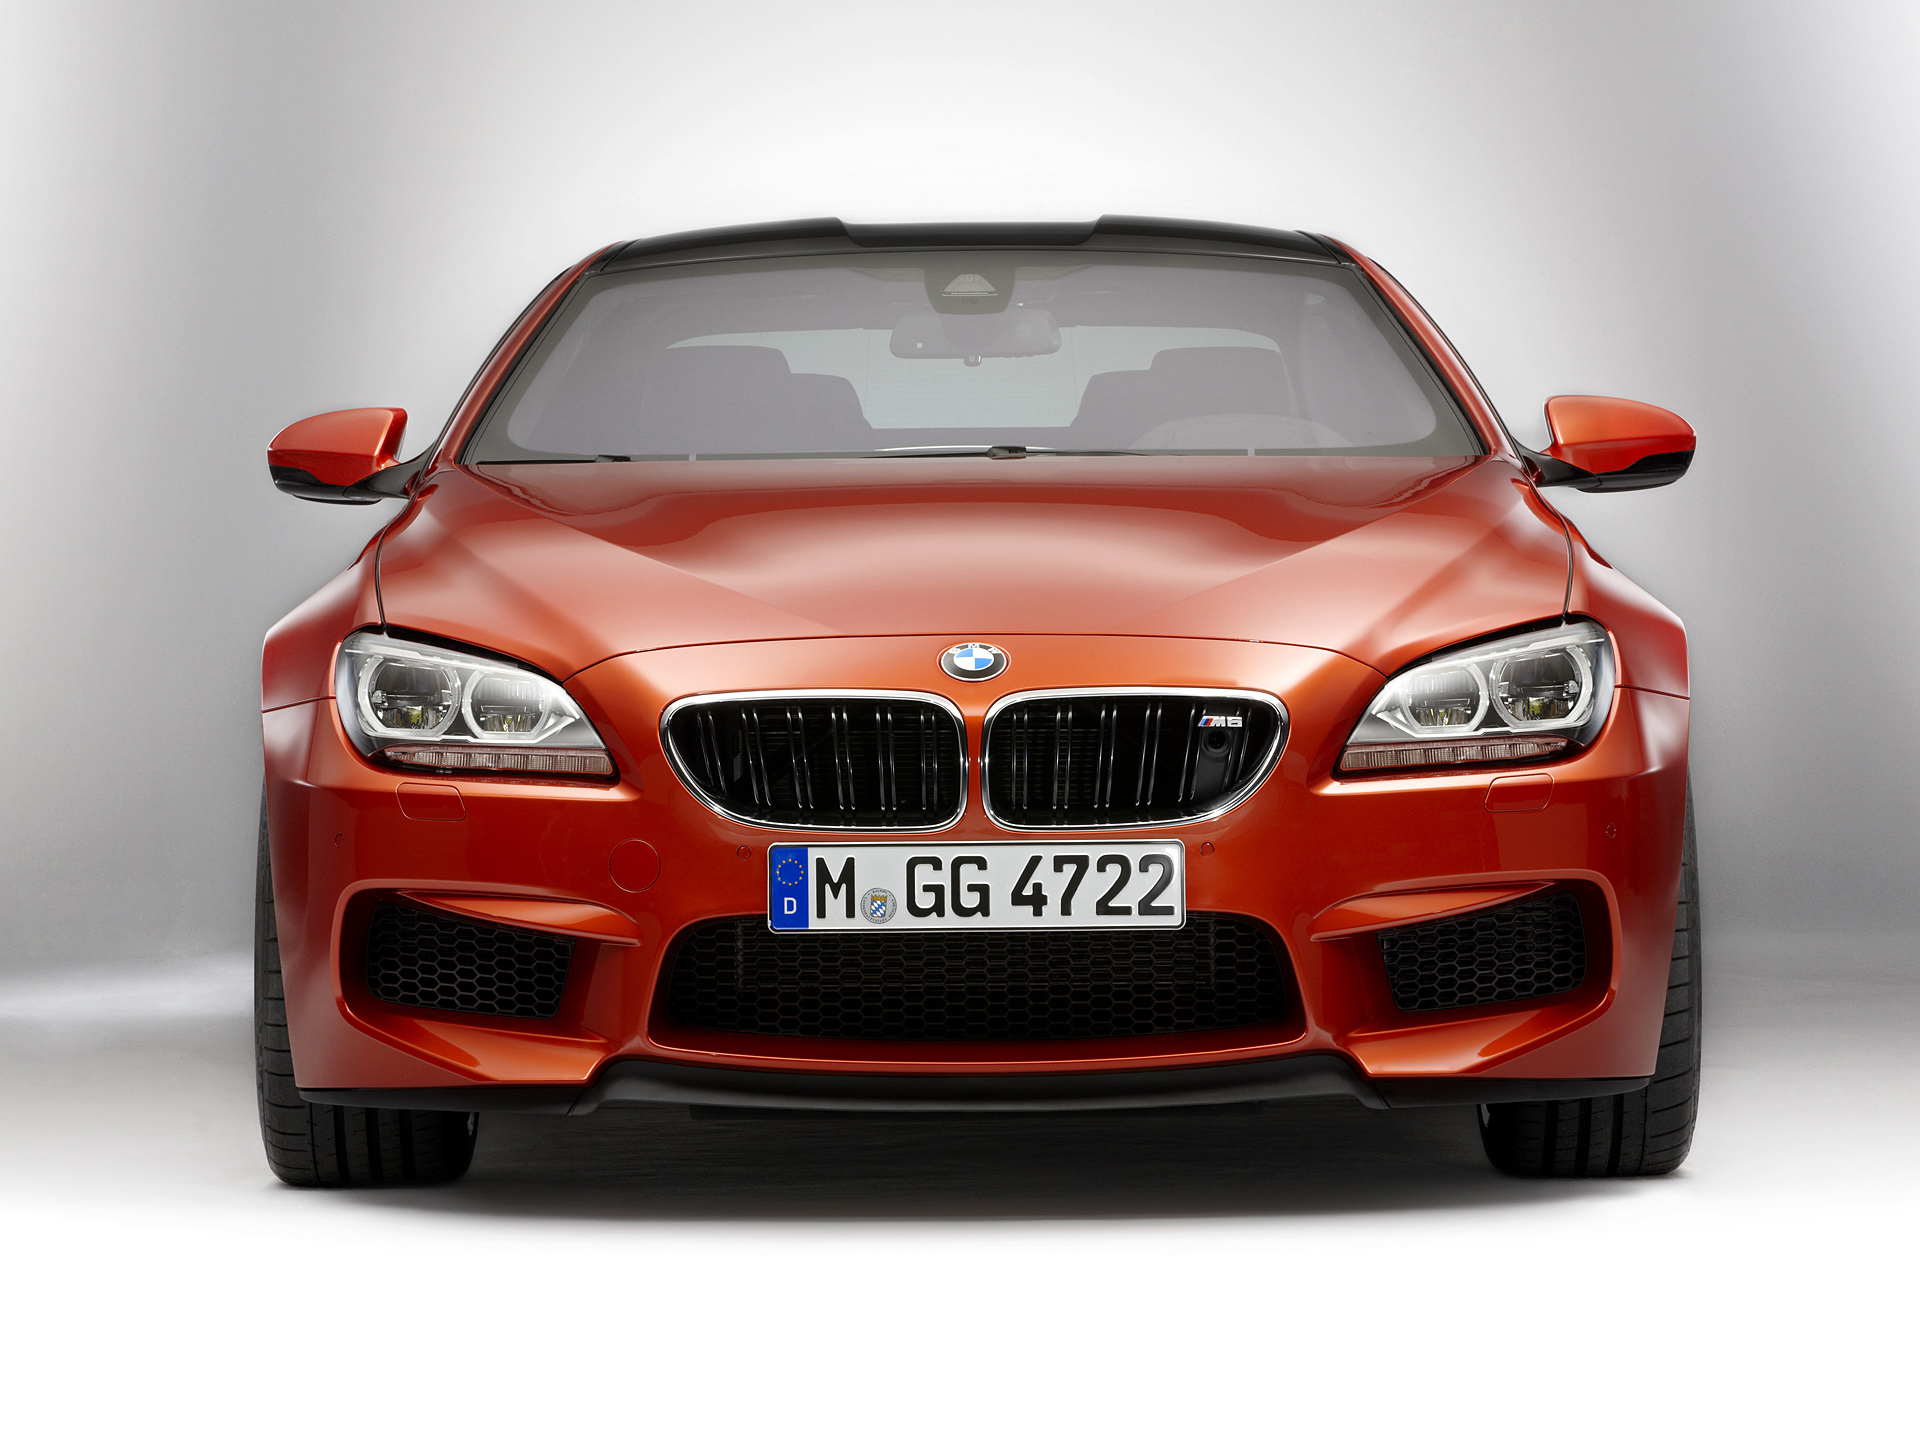  2013 BMW M6 Coupe Wallpaper.